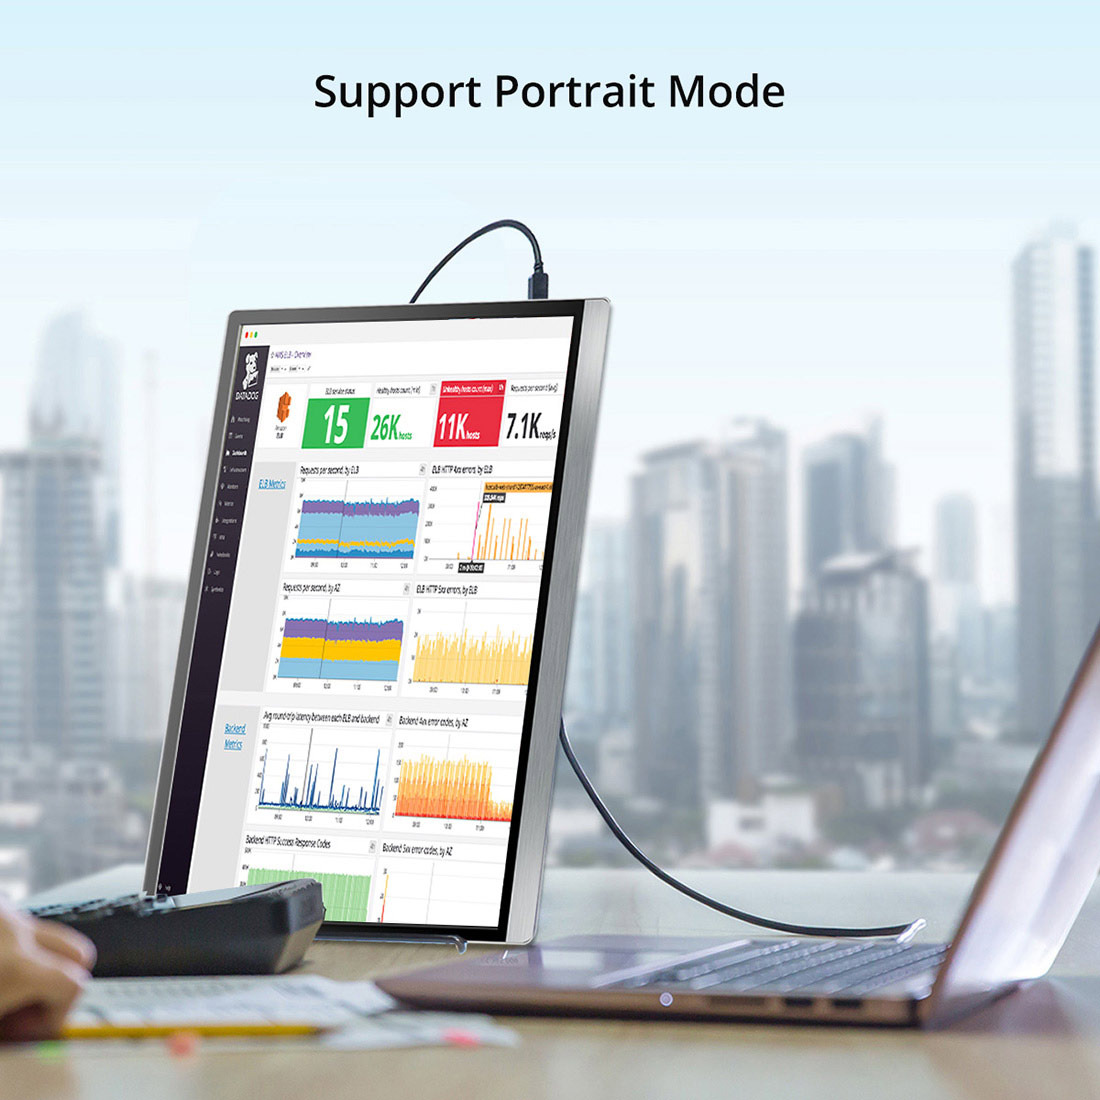 15.6 inch usb c monitor support portrait mode